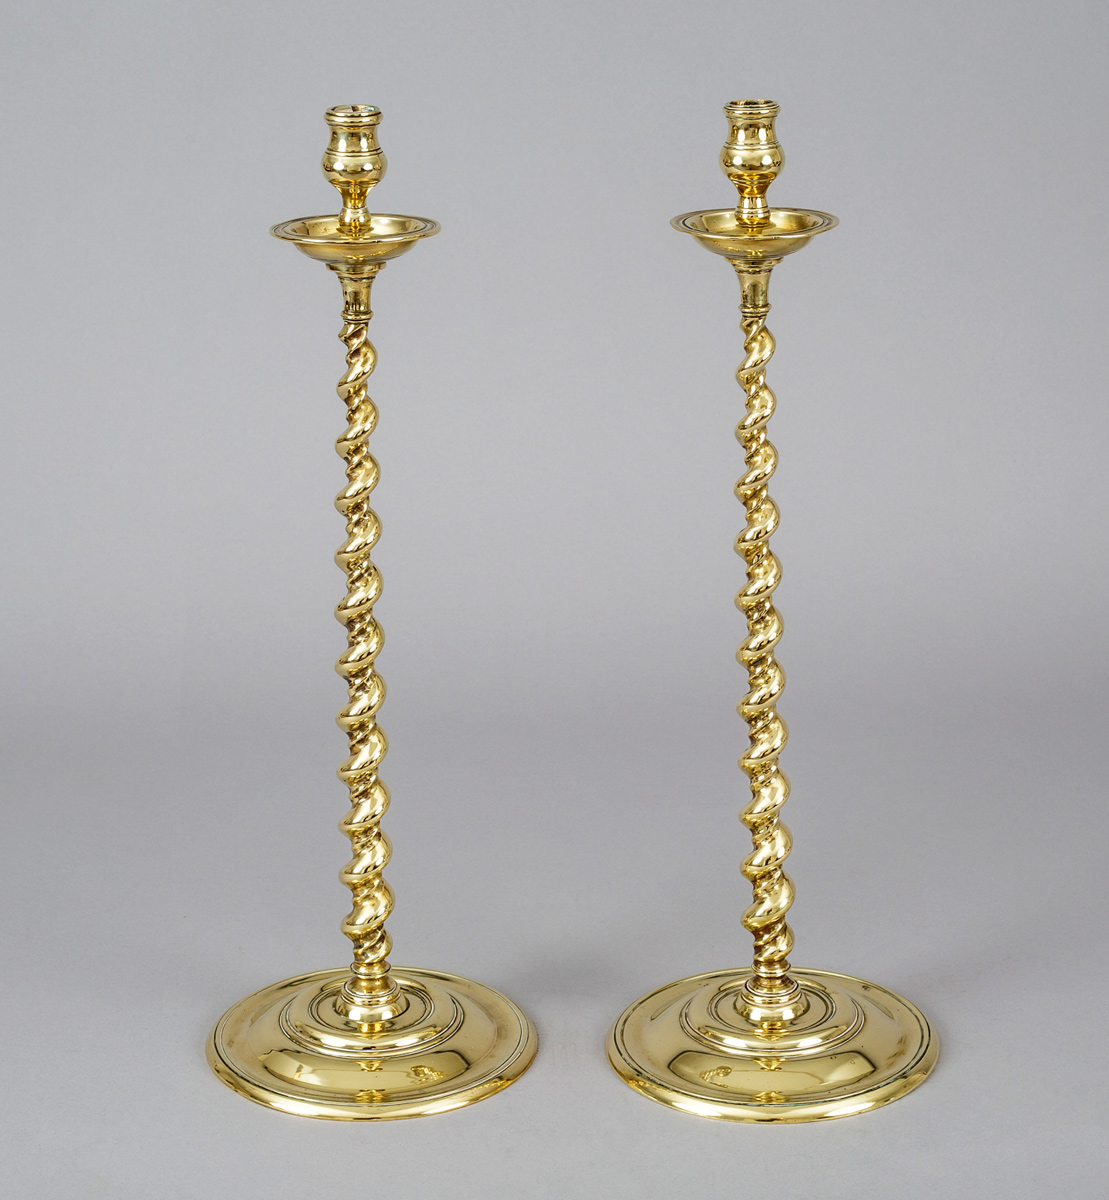 https://susansilverantiques.com/wp-content/uploads/antique-pair-brass-tall-twist-candlesticks-circa-1880-susan-silver-antiques-5918.jpg